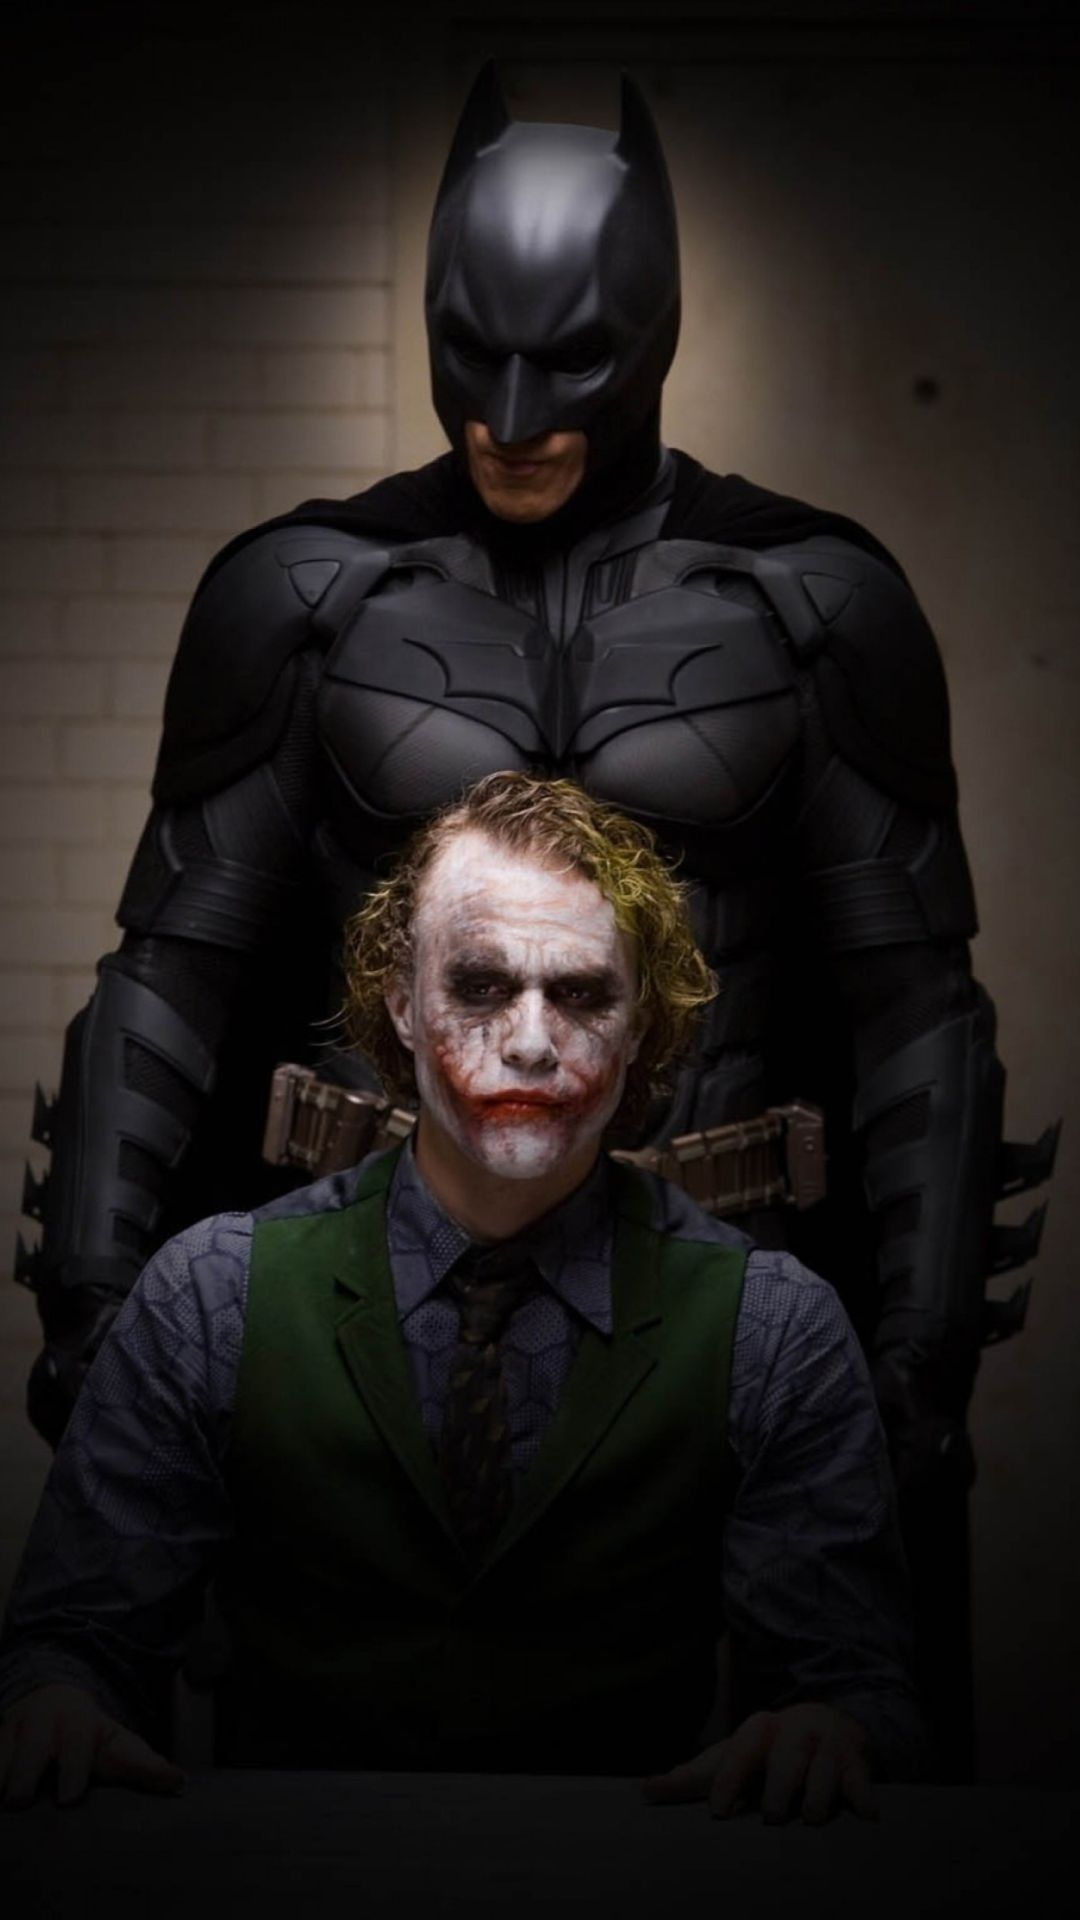 Batman HD Wallpaper for iPhone 6. Batman, Joker dark knight